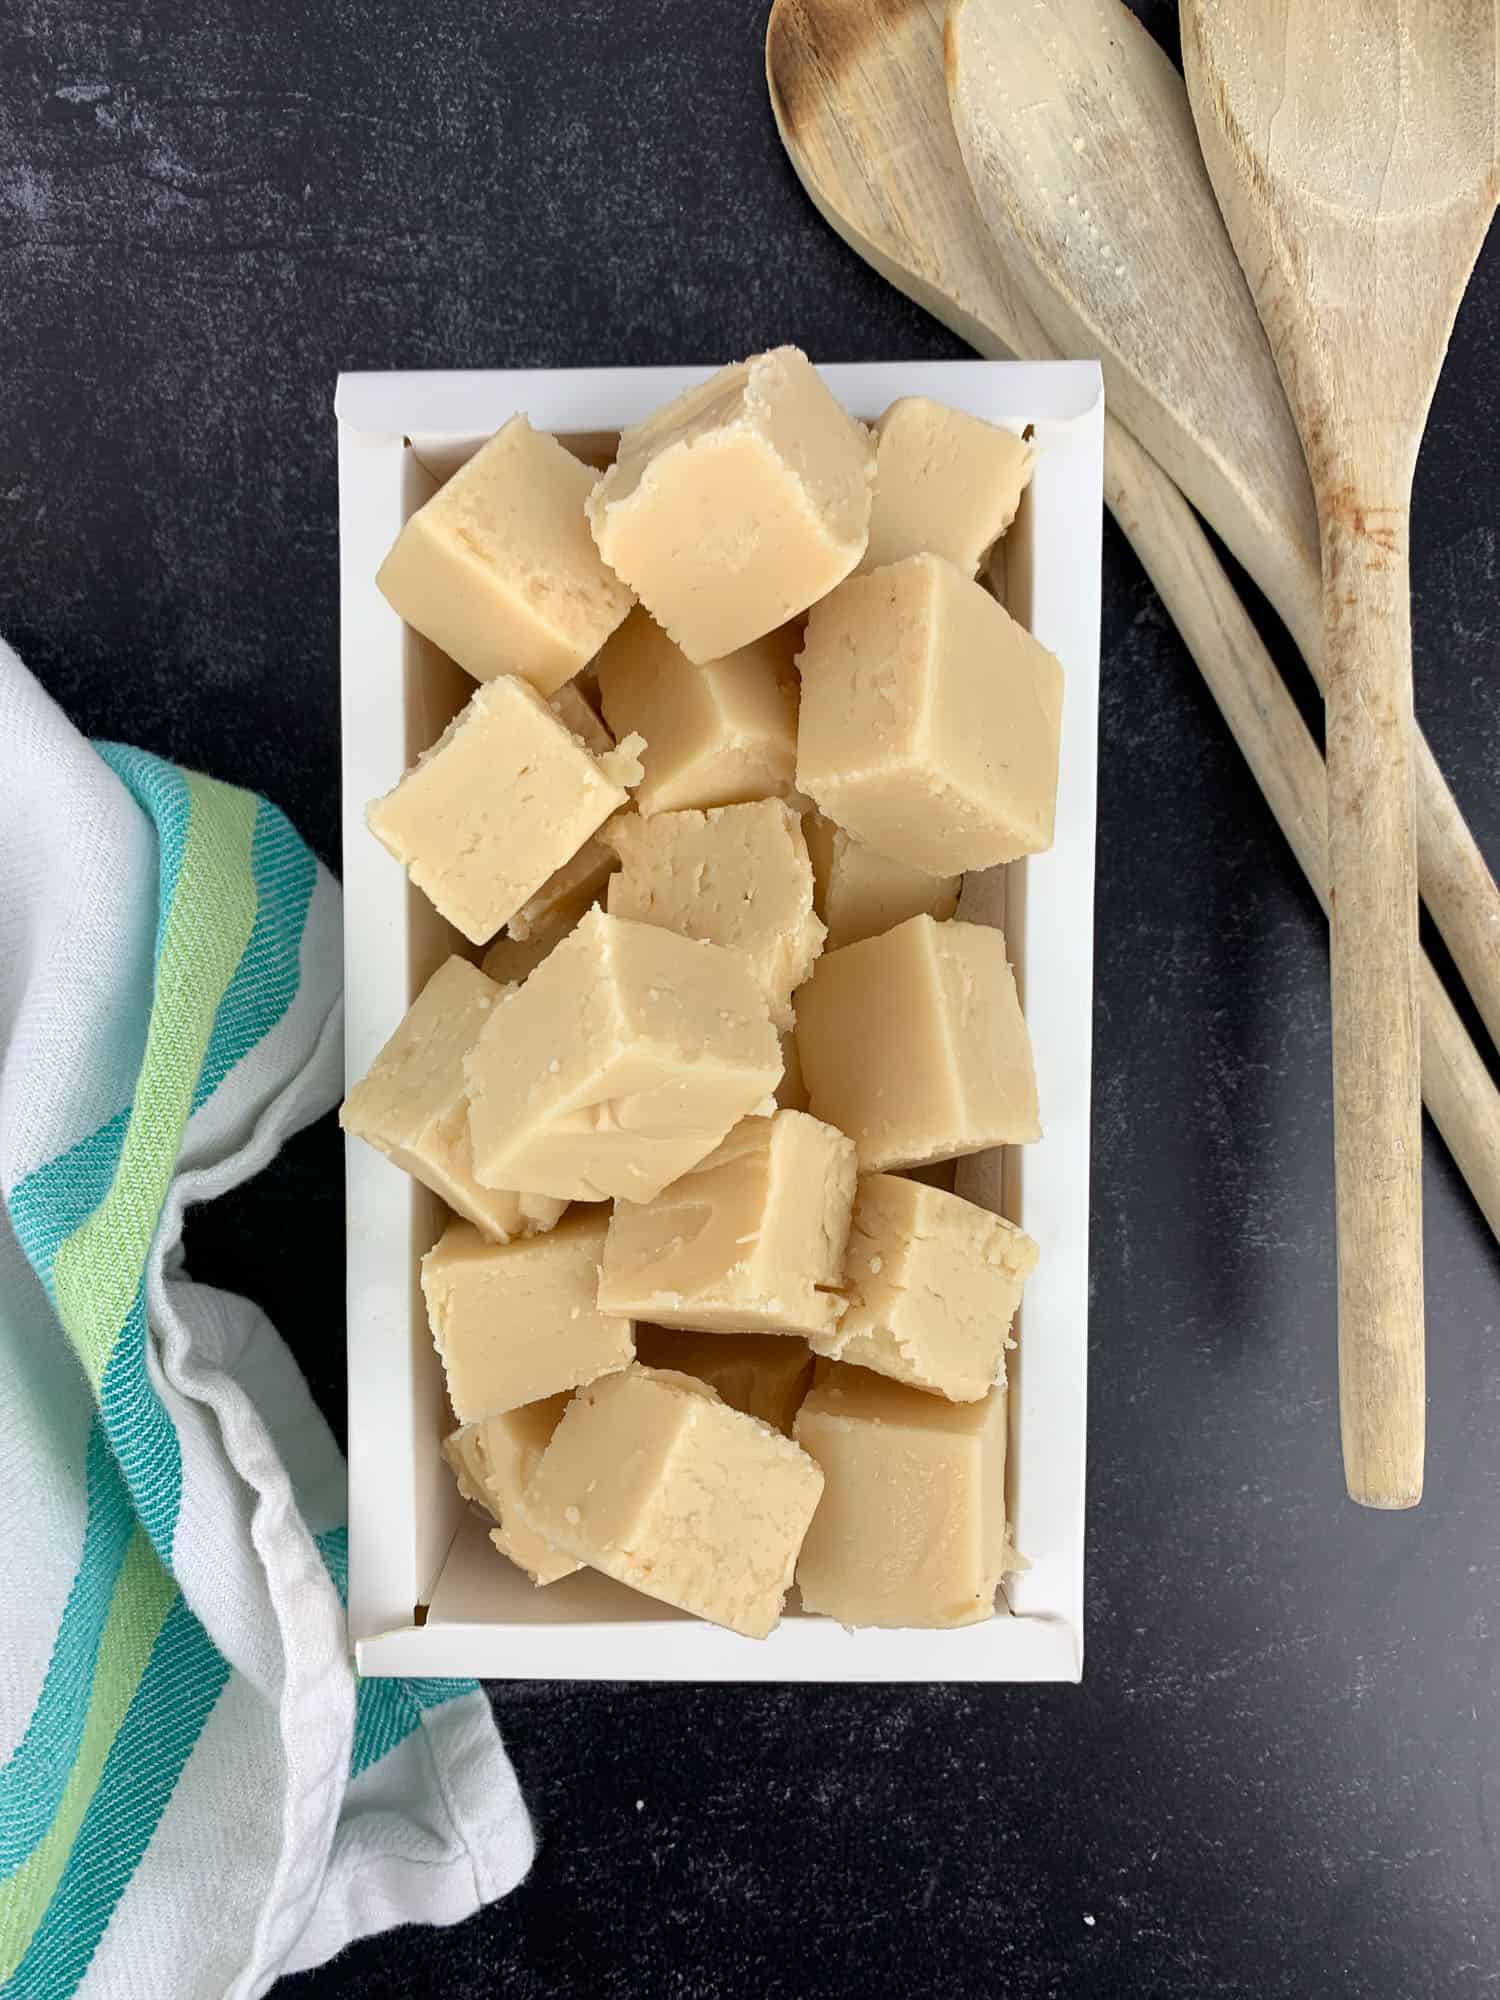 How to Make Vanilla Fudge